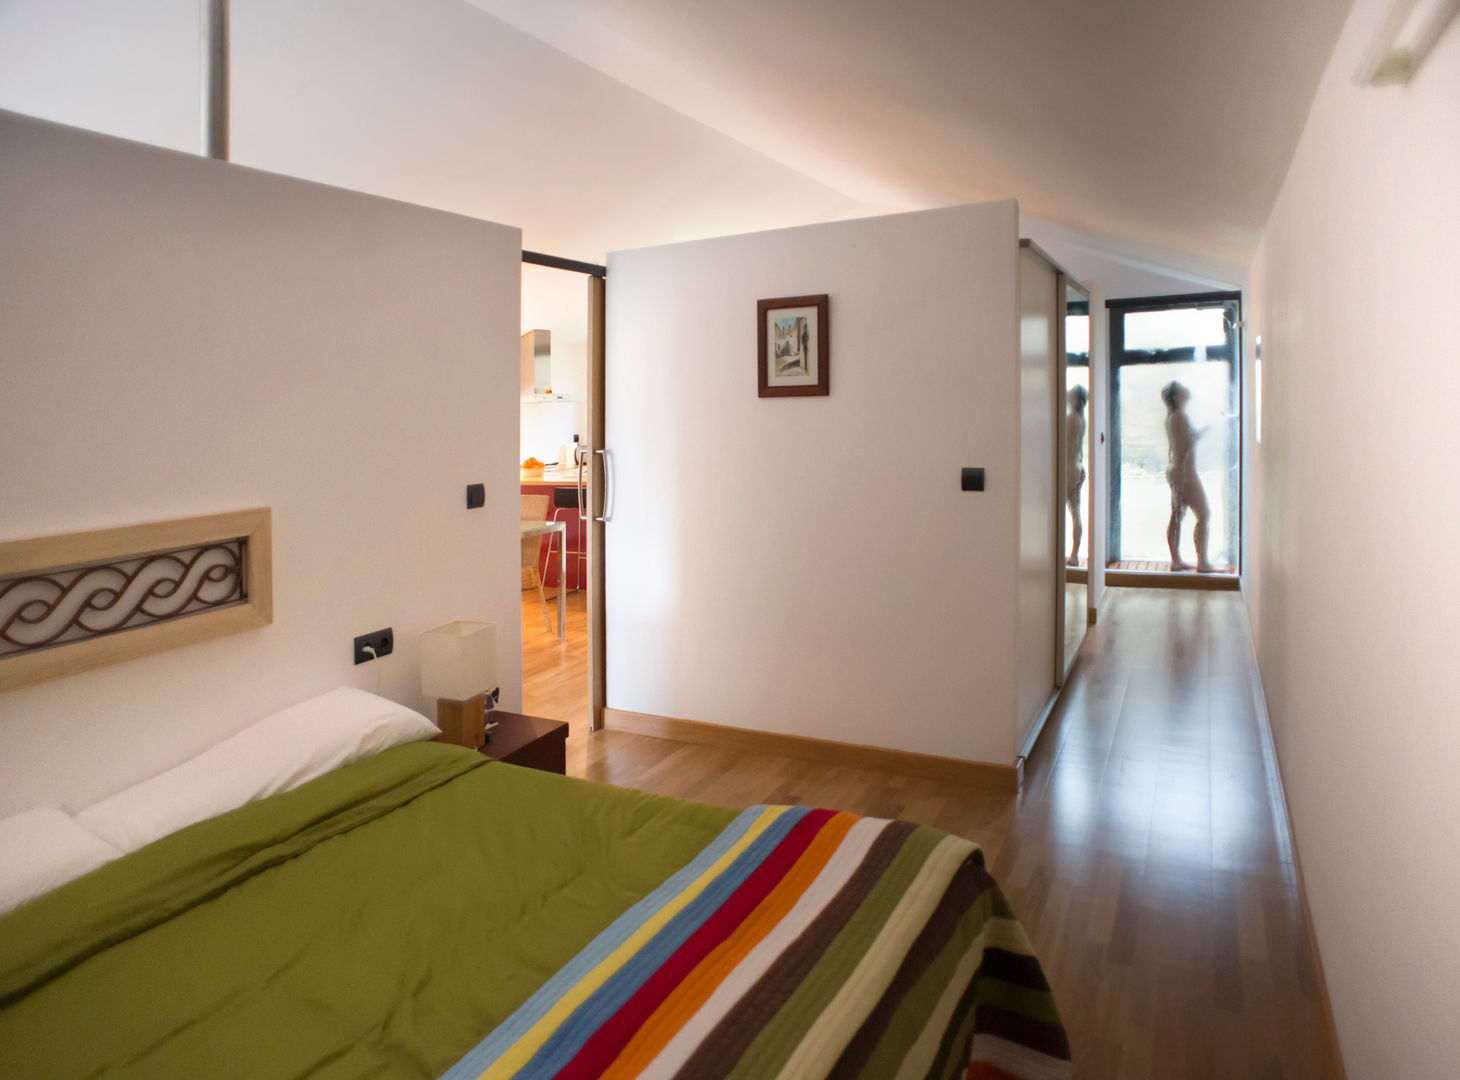 Casa JIR, Majones (Huesca), DMP arquitectura DMP arquitectura Habitaciones modernas